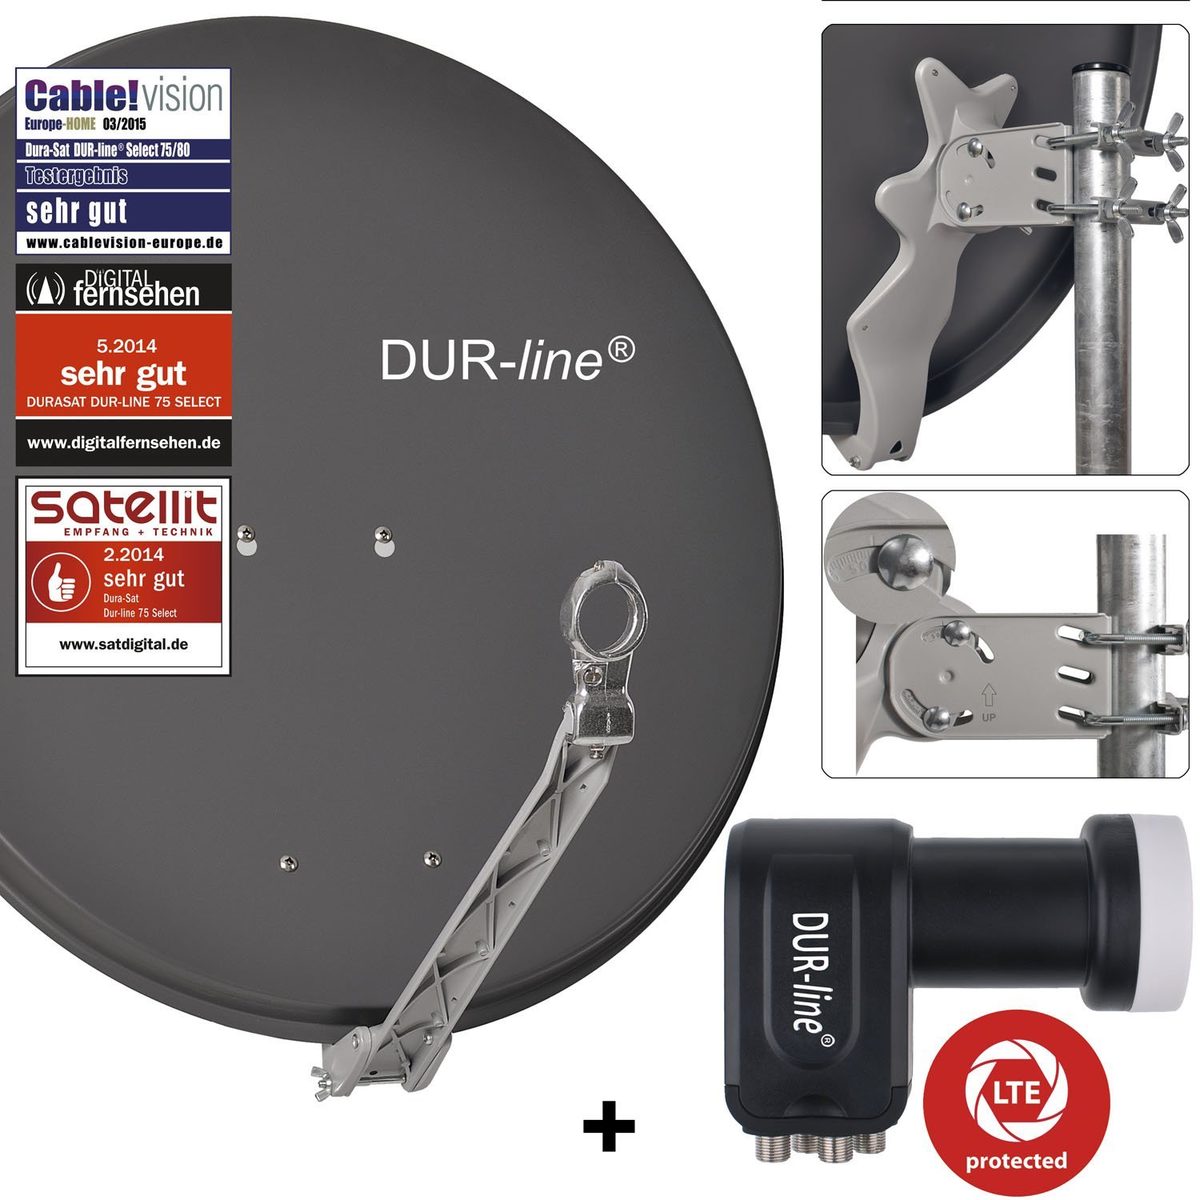 DUR-line 4-Teilnehmer Sat-Anlage | Set bestehend aus DUR-line Select 75/80 anthrazit + DUR-line +Ultra Quad LNB